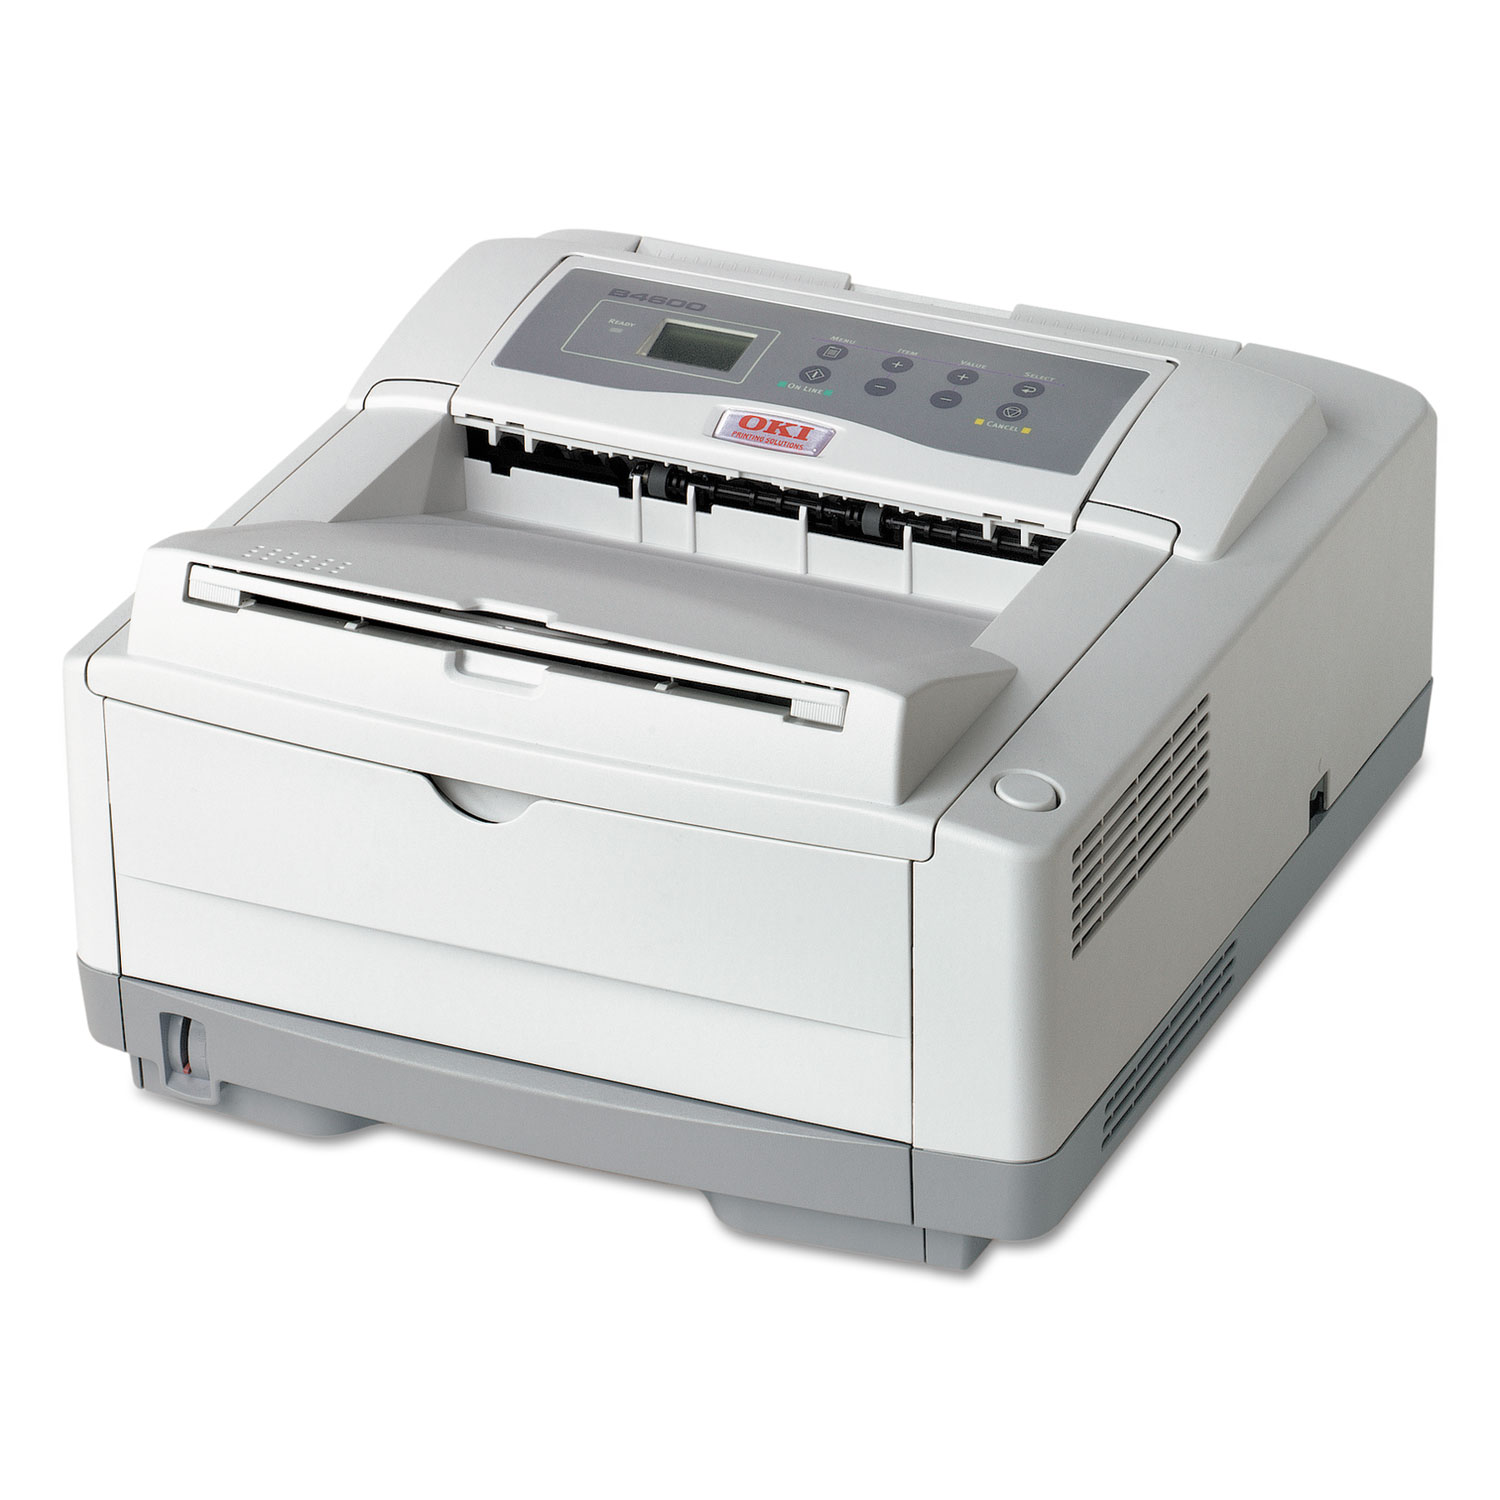 B4600 Series Digital Monochrome Printer, 230V, Beige